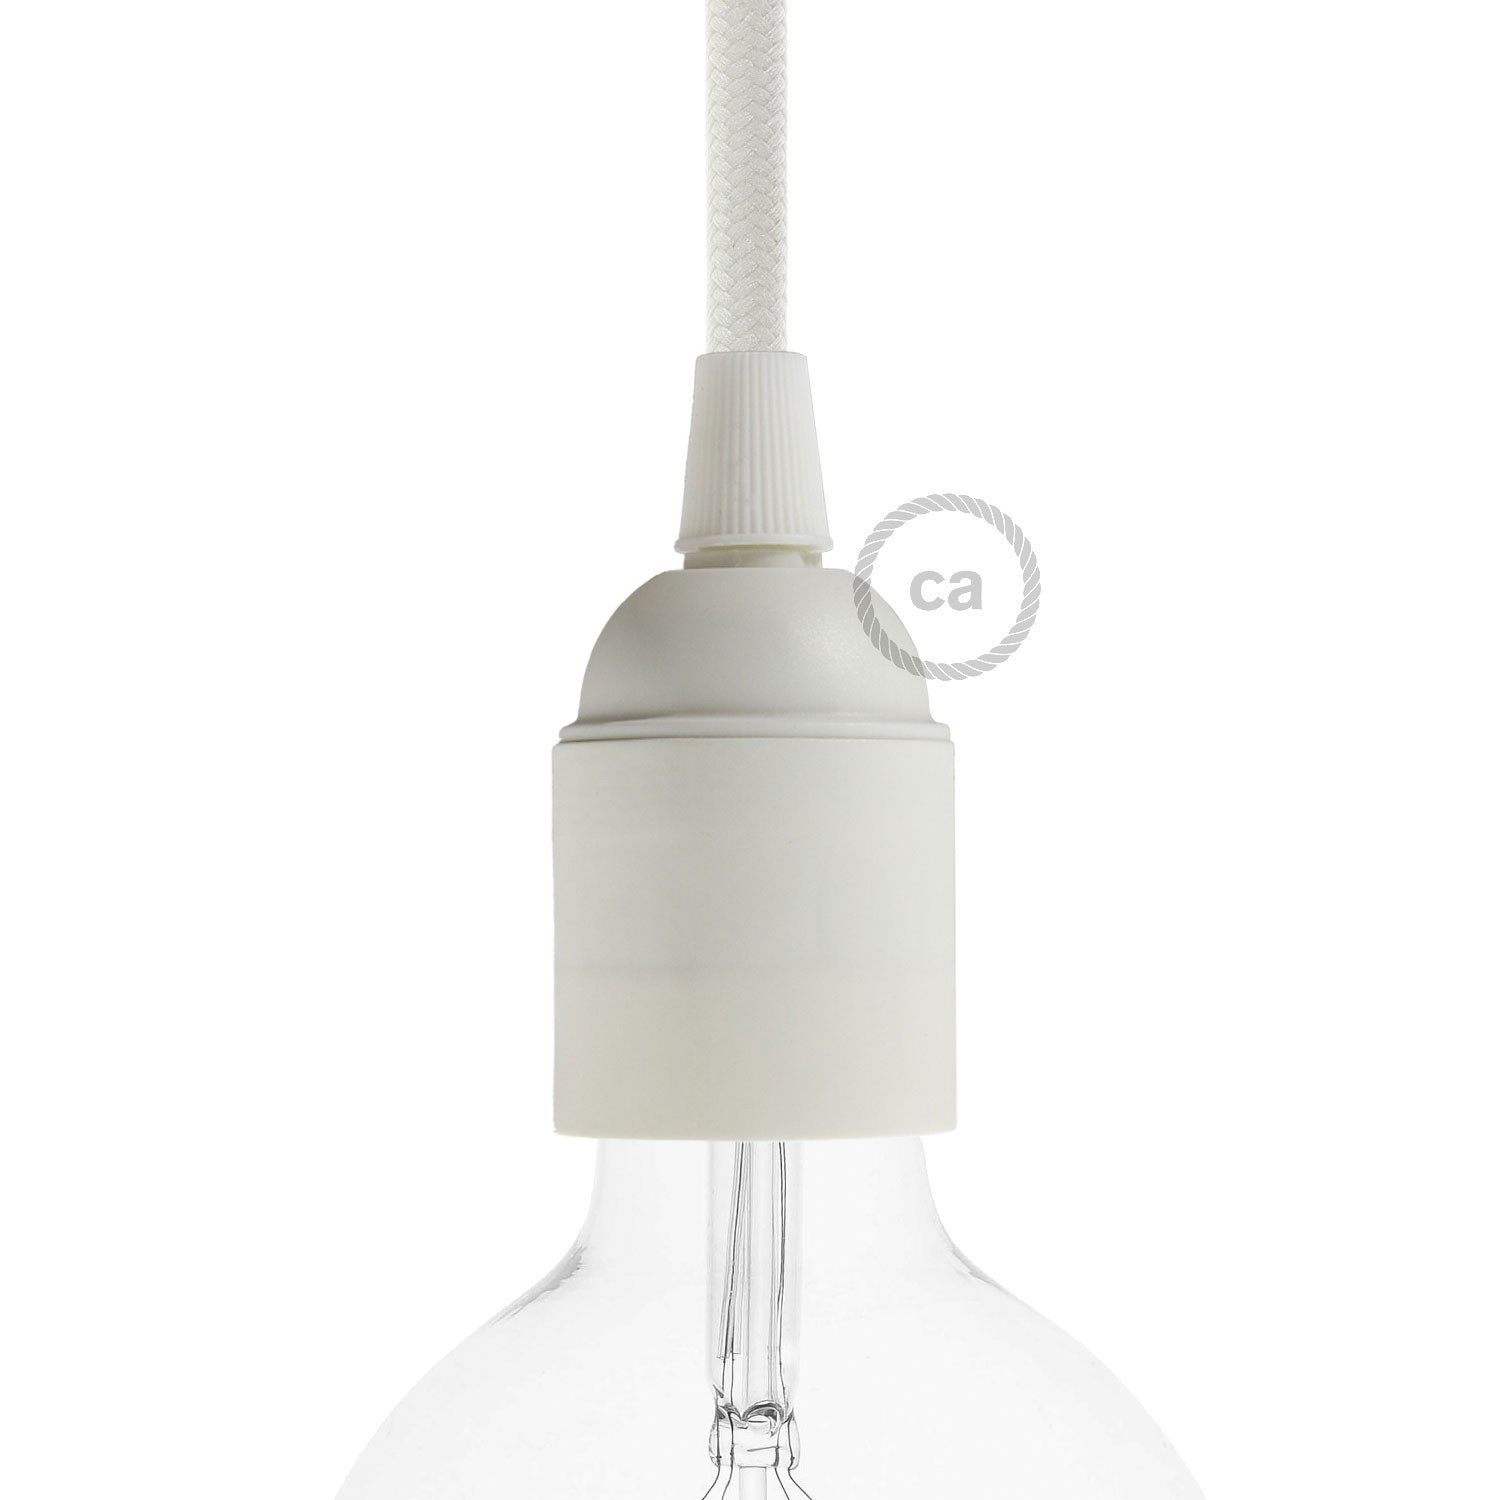 Thermoplastic E27 lamp holder kit